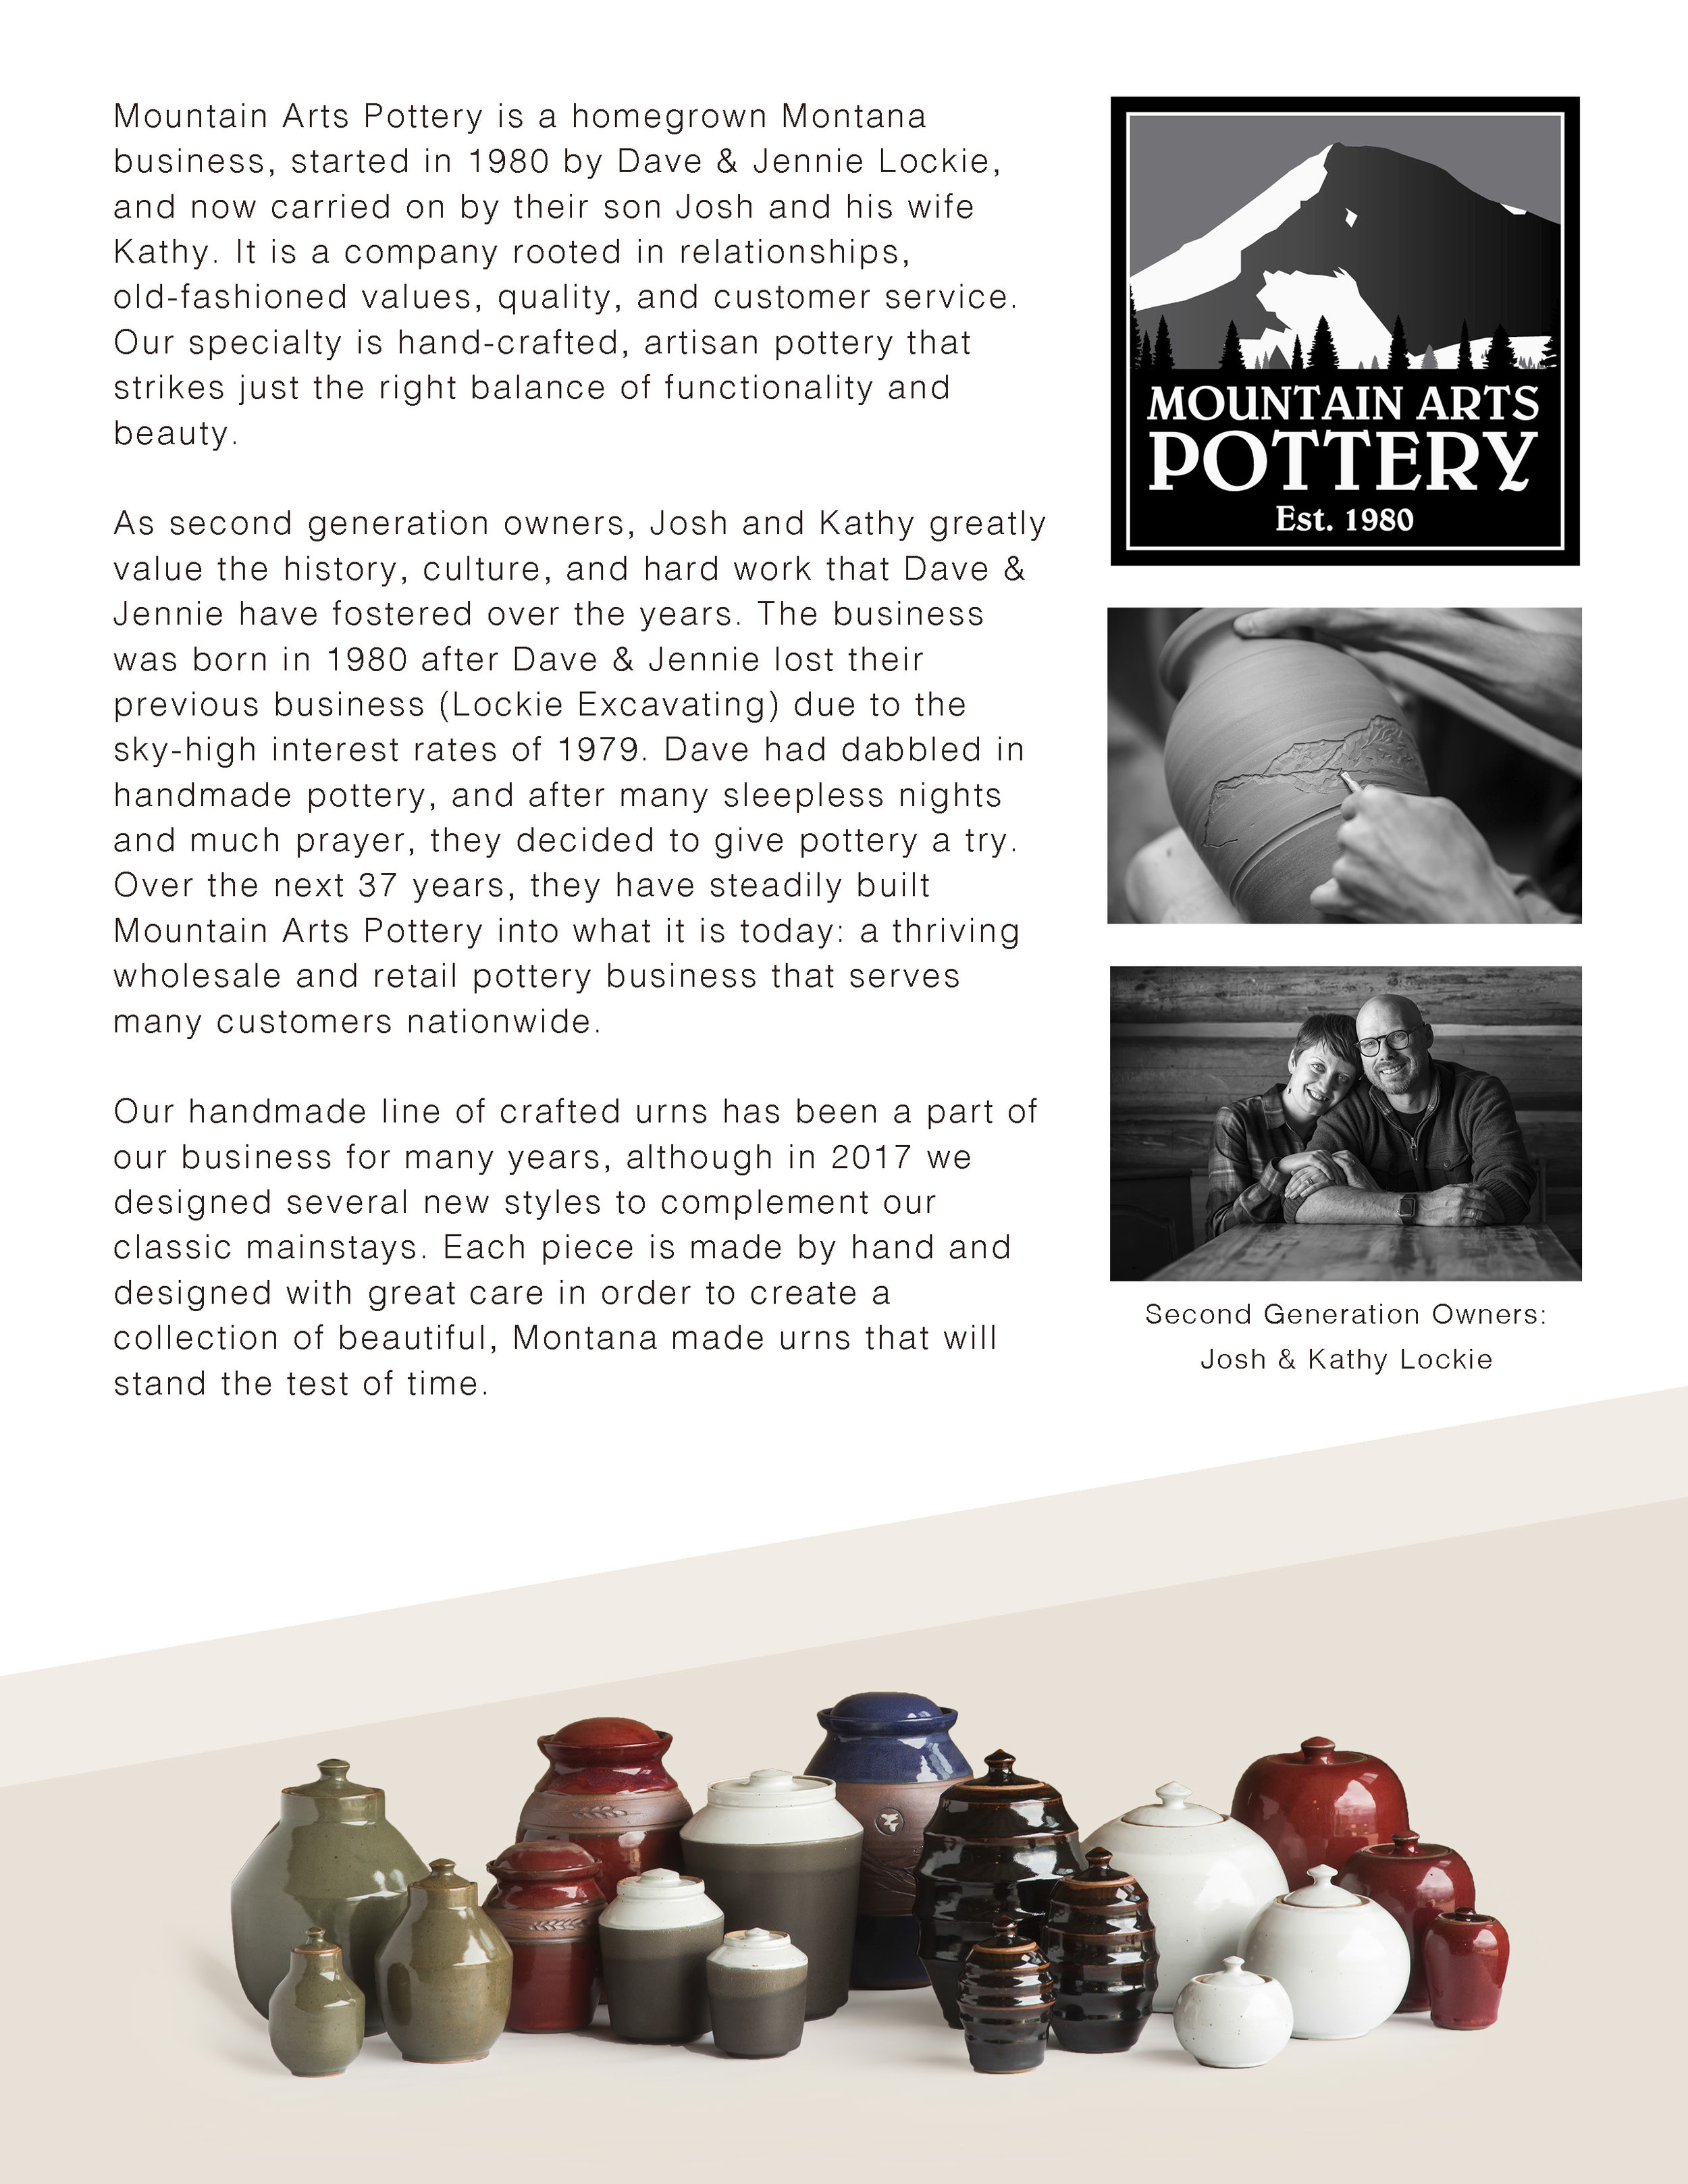 Mountain Arts Pottery Urn Article (1).jpg